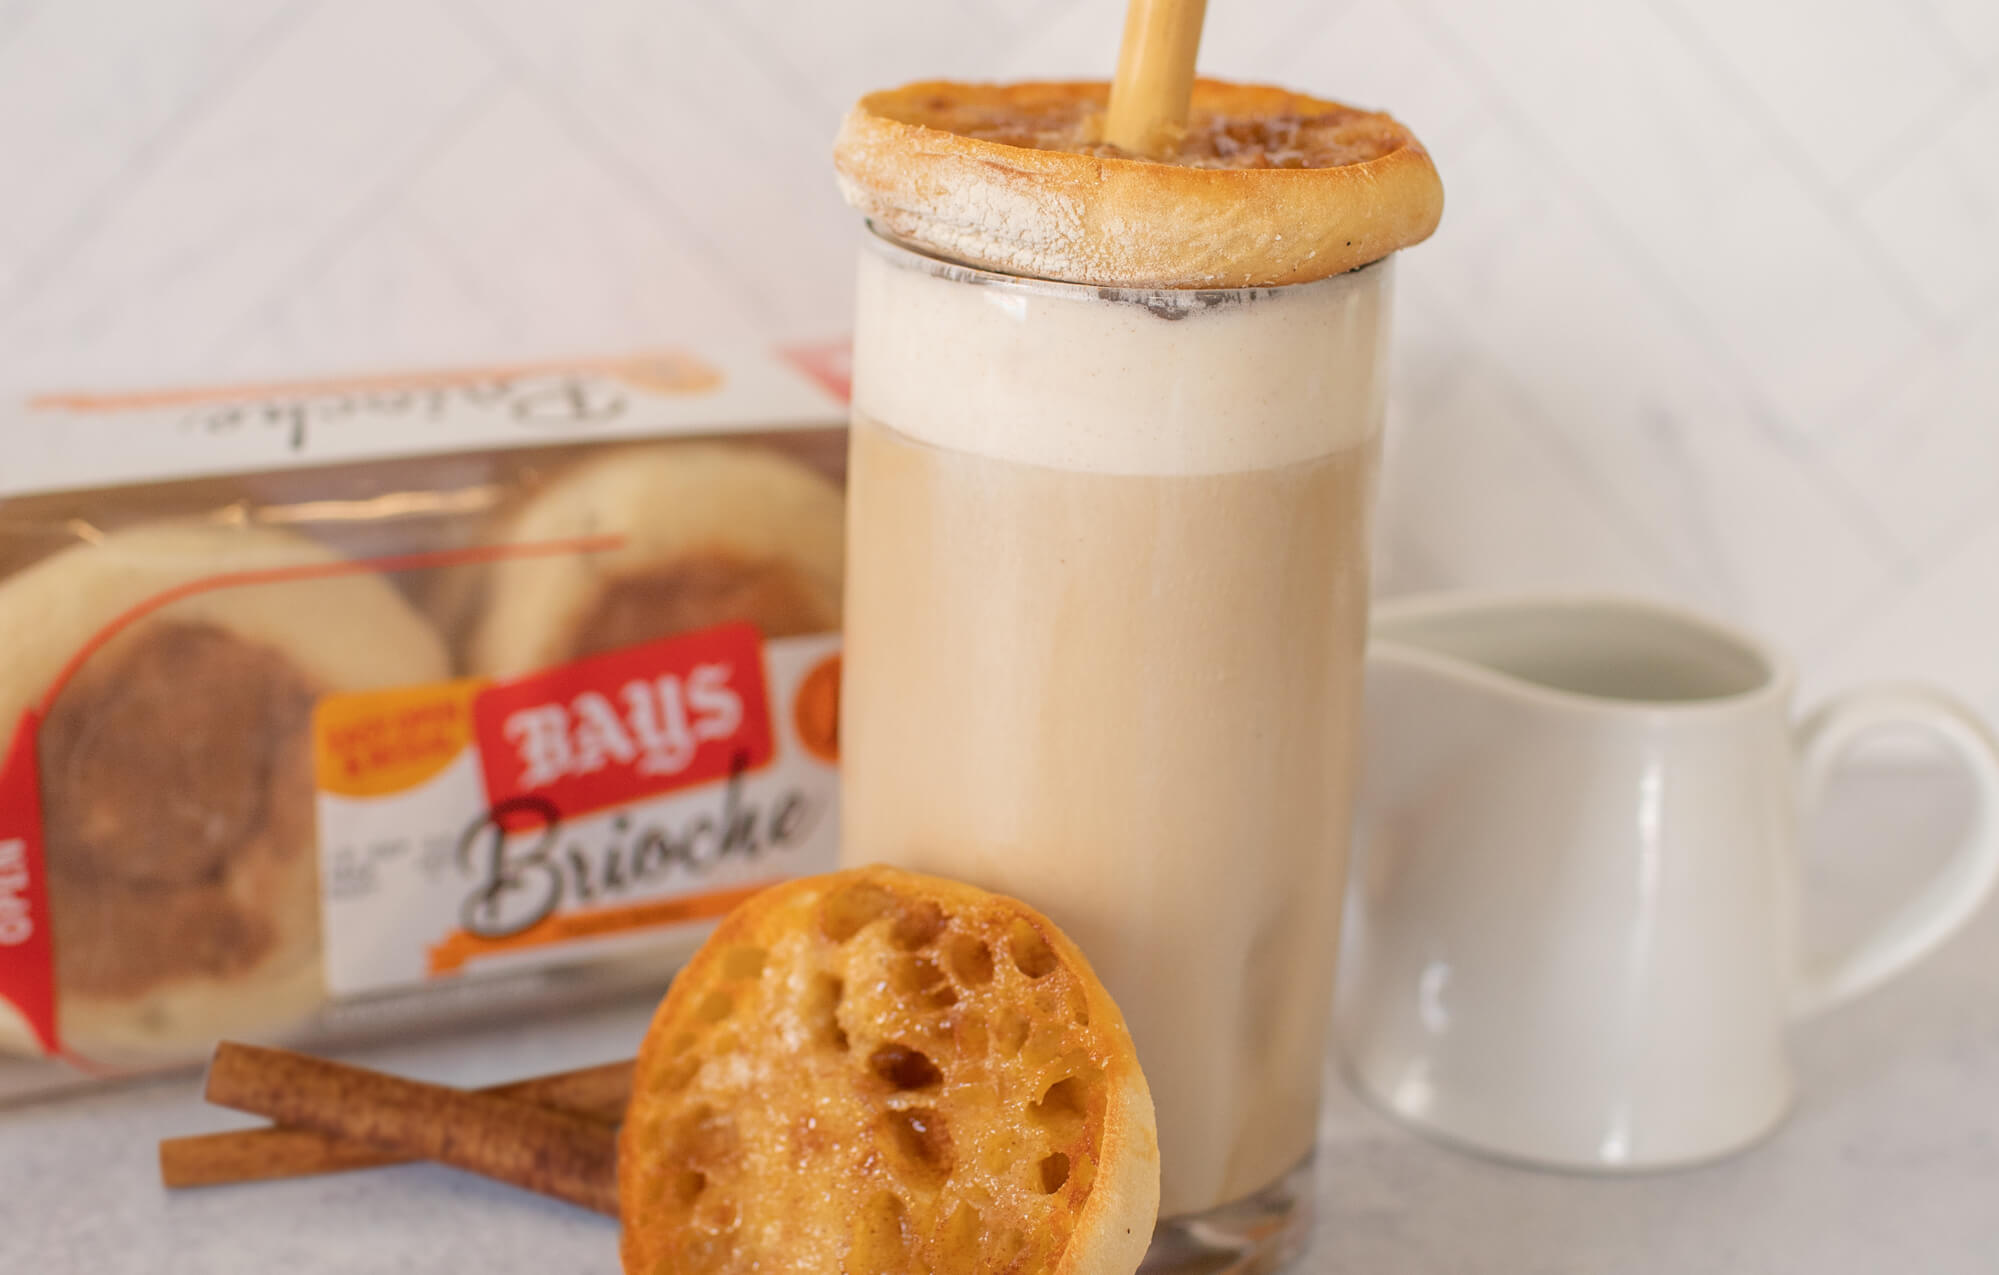 Cinnamon Coffee Crunch and Bays English Muffin